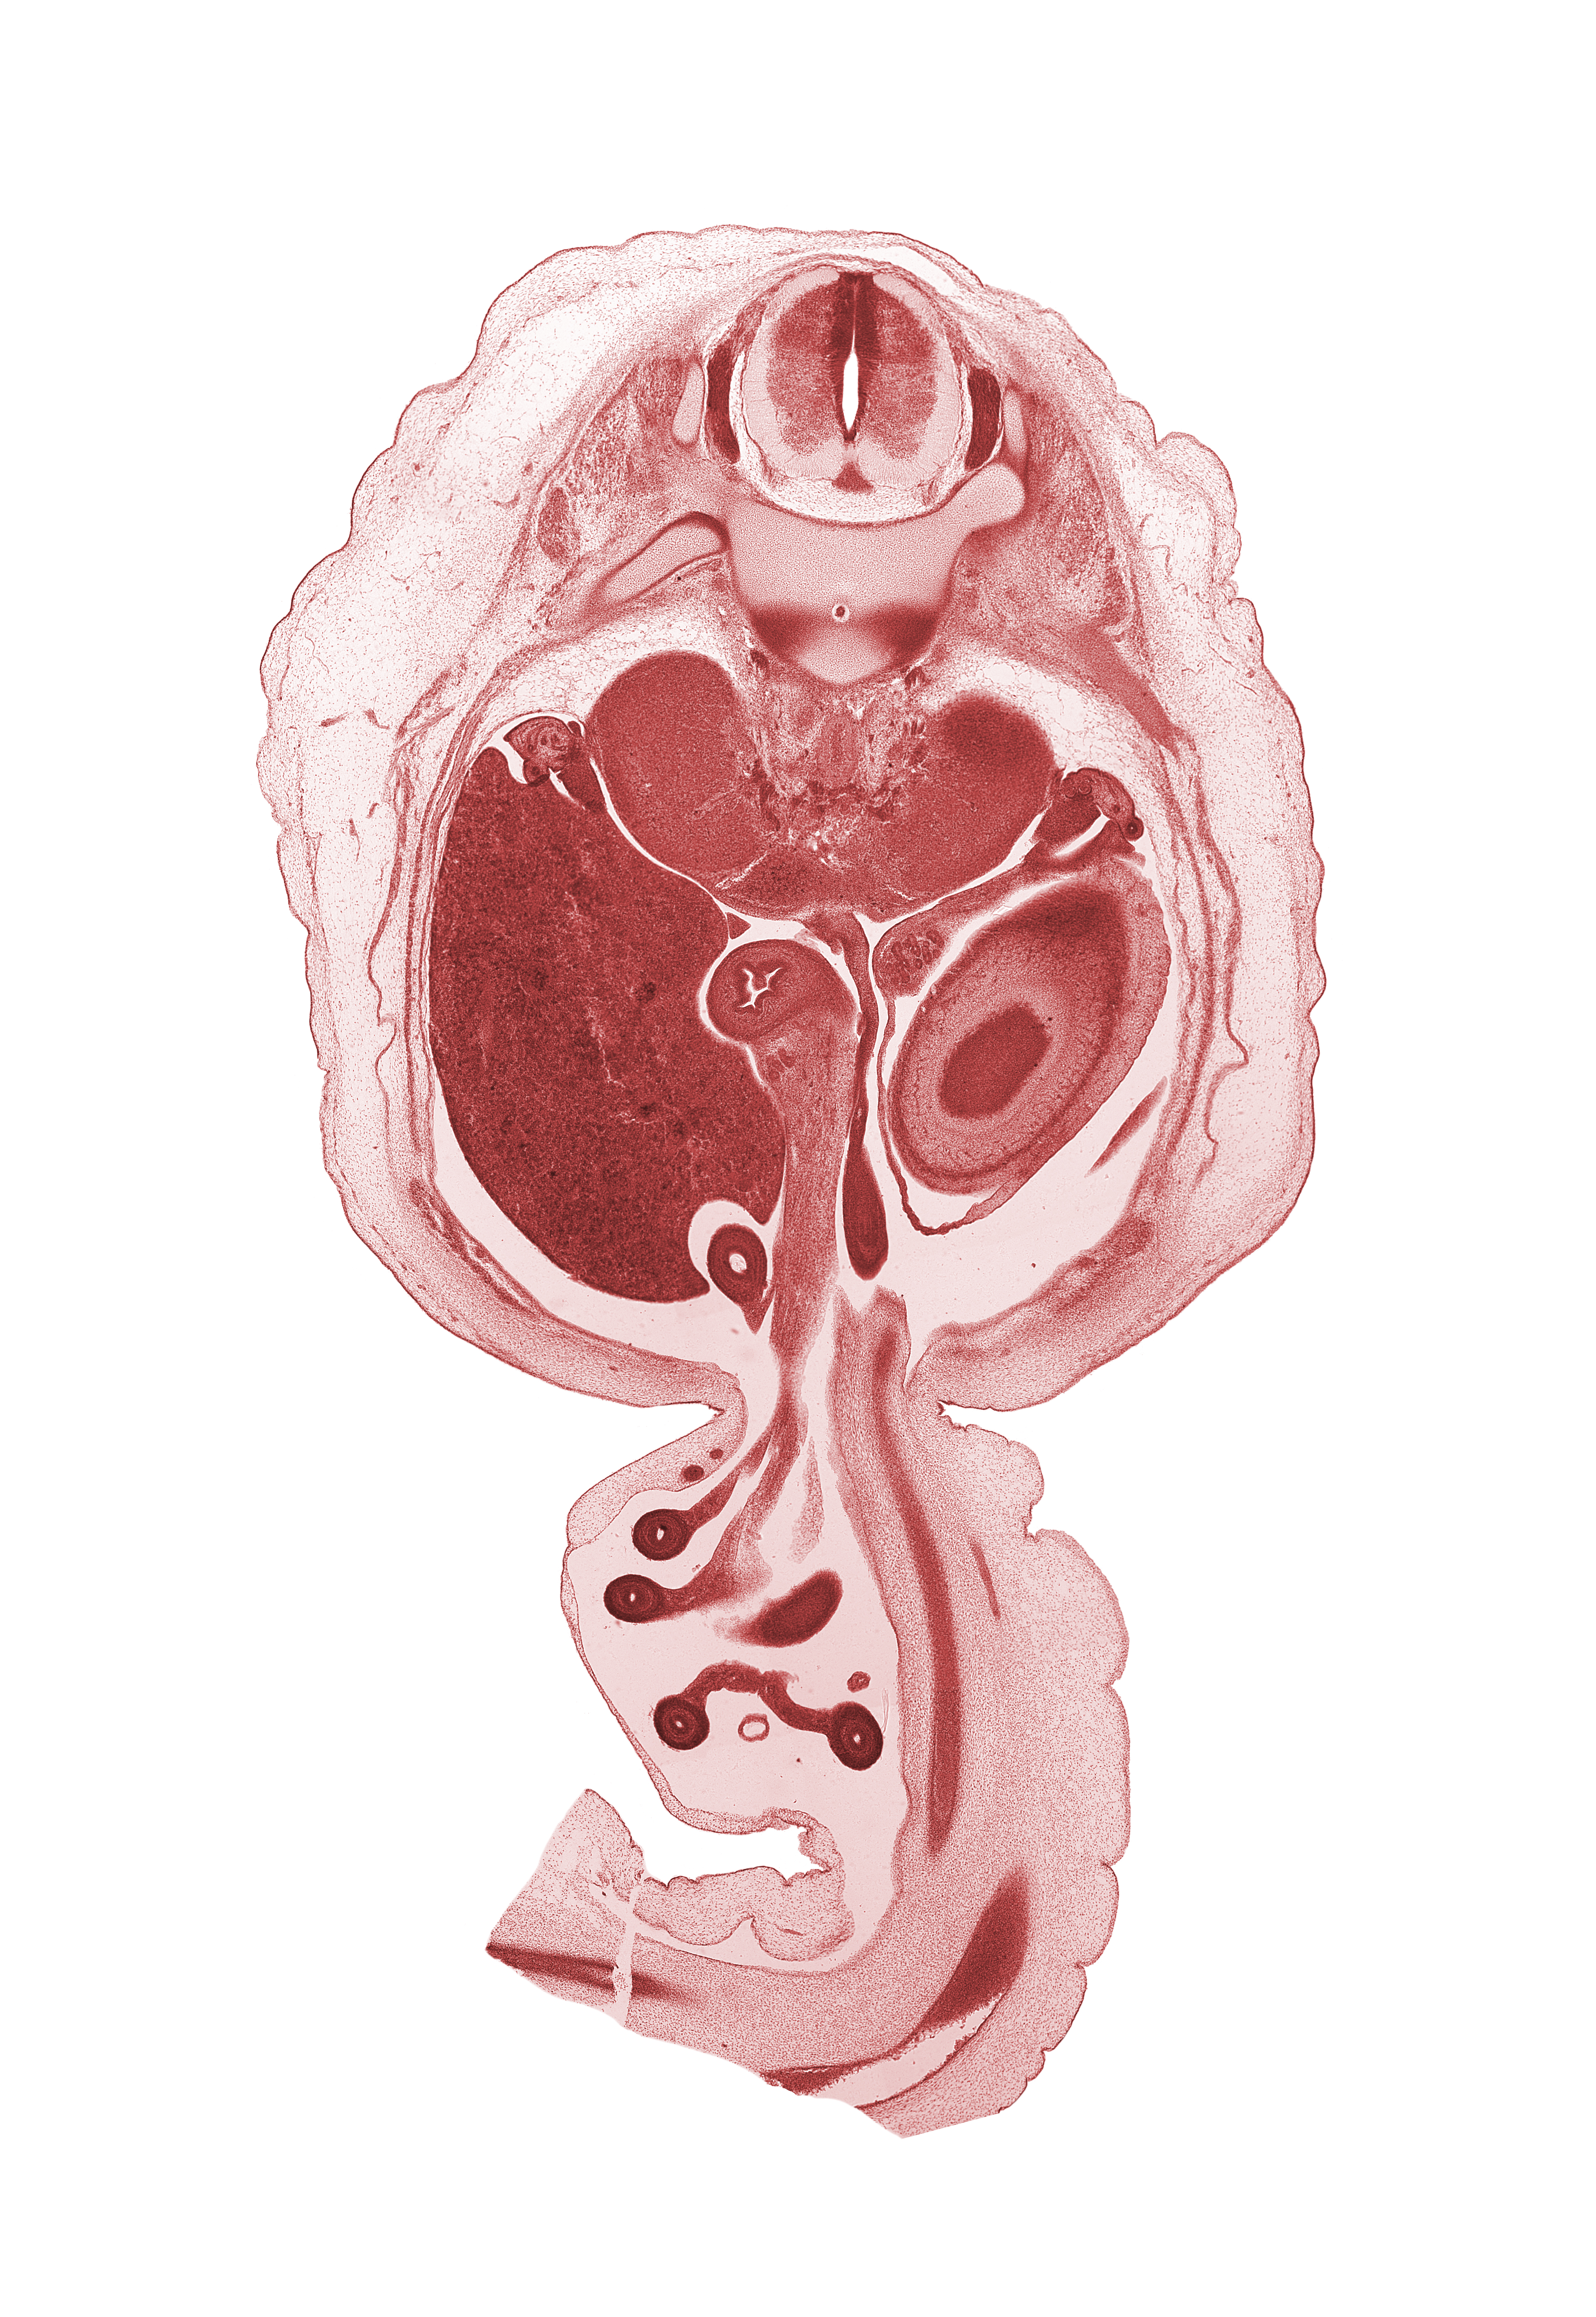 T-12 / L-1 intervertebral disc, T-12 spinal ganglion, T-12 ventral root, allantois, aorta, body of dorsal pancreas, caudal edge of left lobe of liver, distal limb of herniated midgut, dorsal mesogastrium, duodenum, hindgut (colon), jejunum, left umbilical artery, lesser sac (omental bursa), mesentery, mesocolon, notochord, omphalomesenteric artery, proximal limb of herniated midgut, right lobe of liver, superior mesenteric ganglion, suprarenal gland medulla, sympathetic trunk, testis, umbilical vein